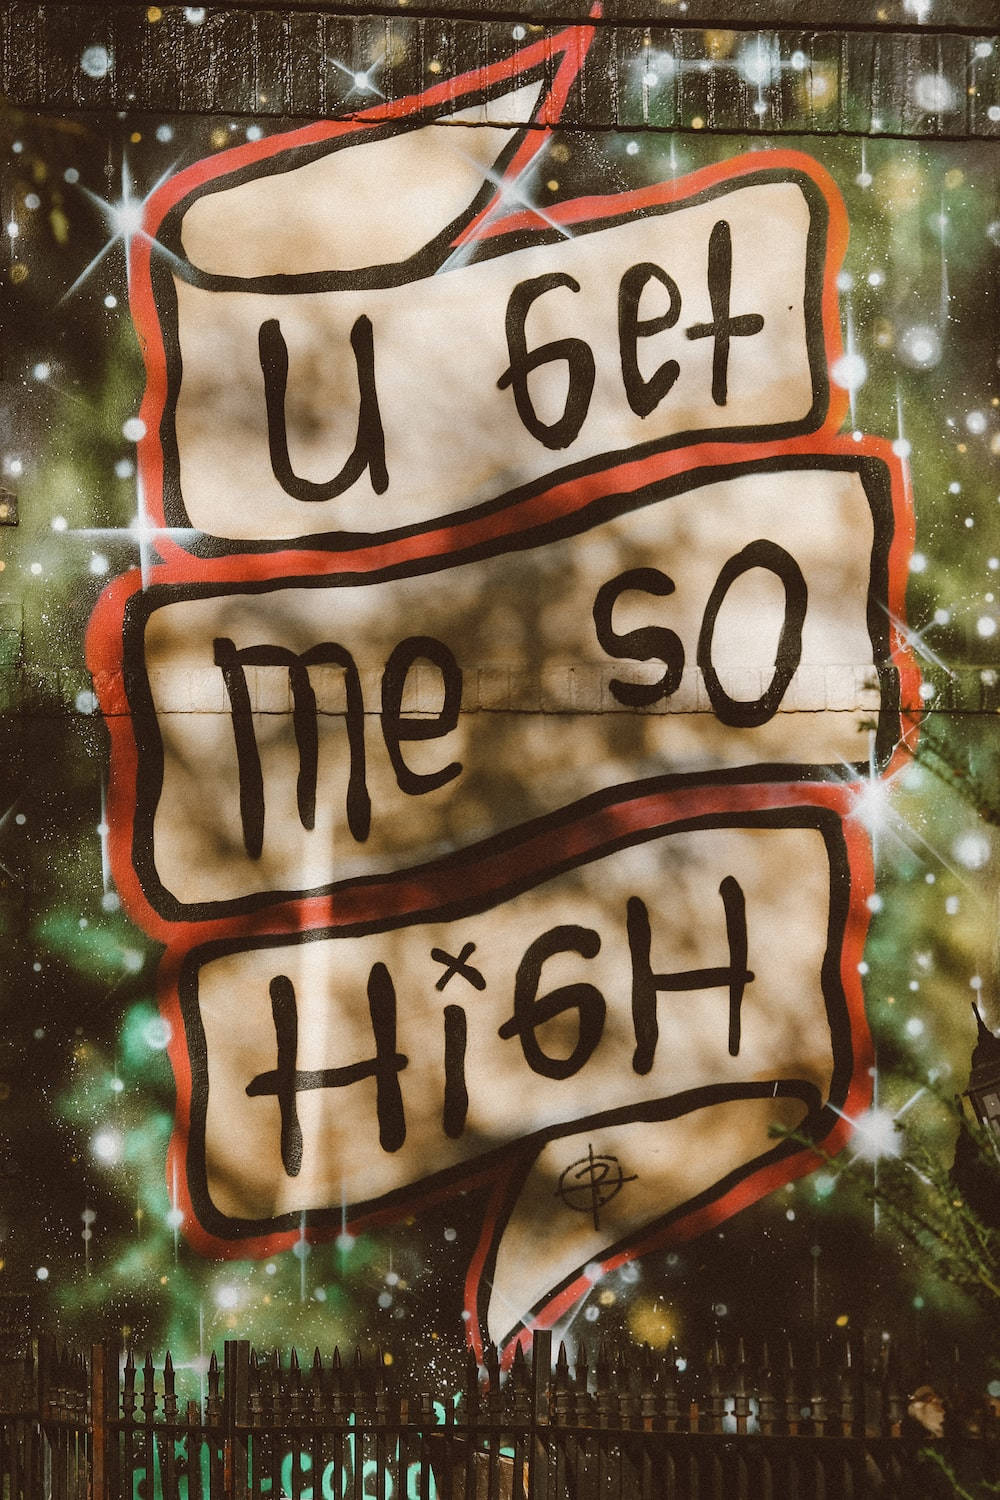 U Get Me So High 420